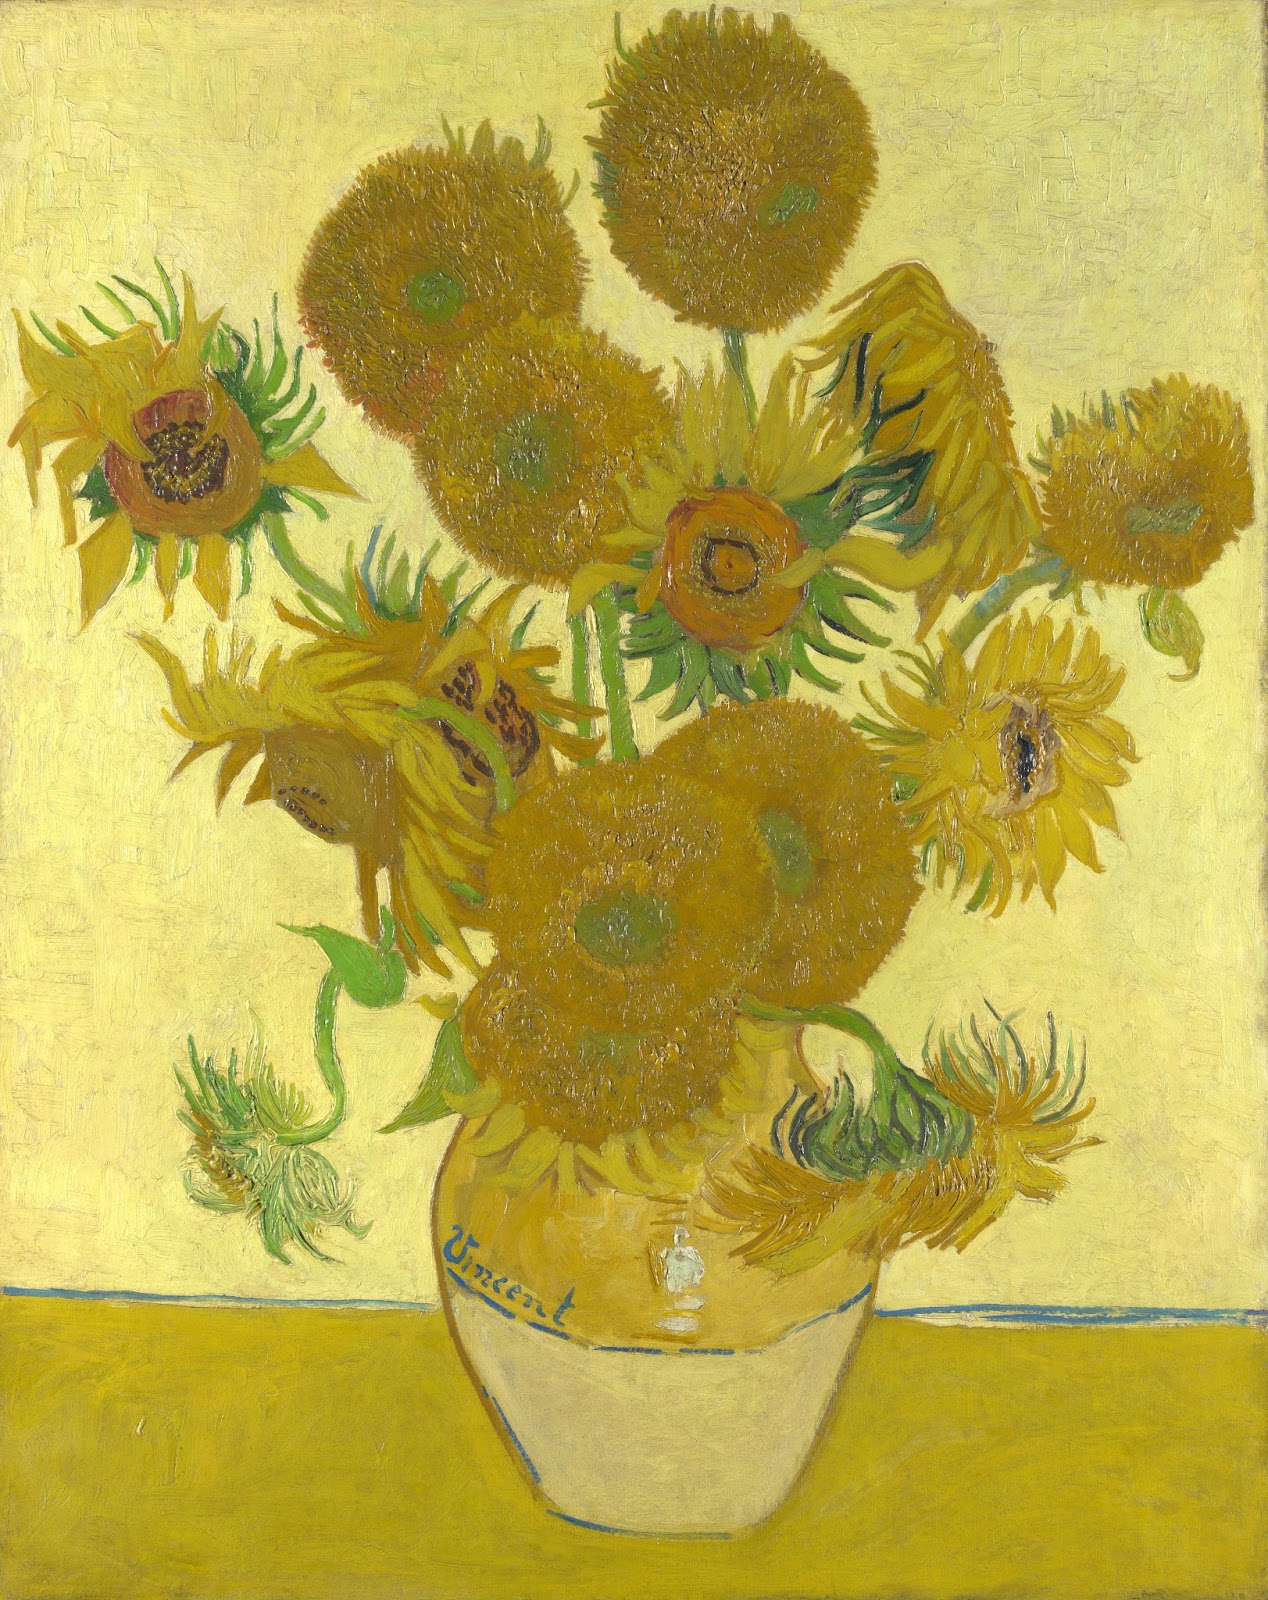 Vincent+Van+Gogh-1853-1890 (477).jpg